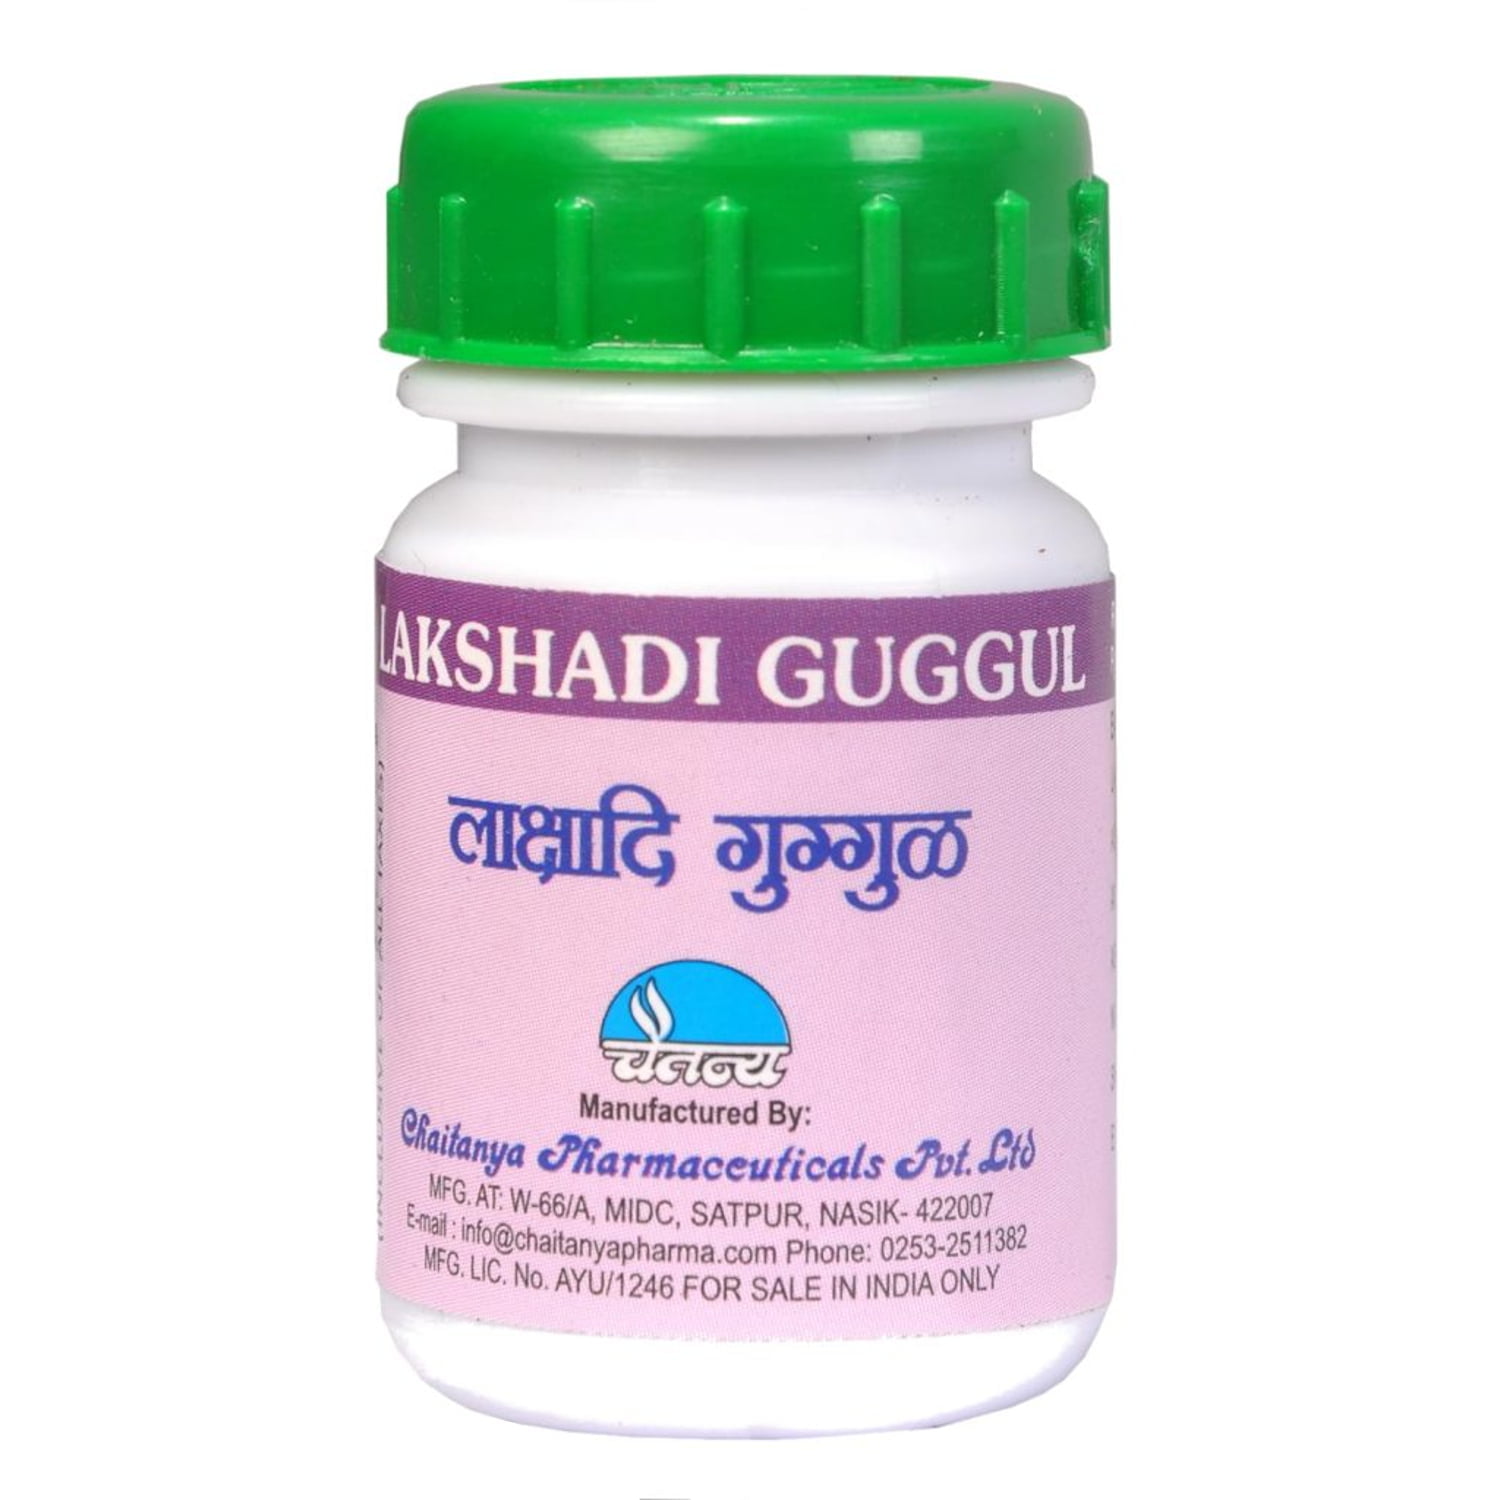 lakshadi guggul 4000 tab upto 20% off free shipping chaitanya pharmaceuticals